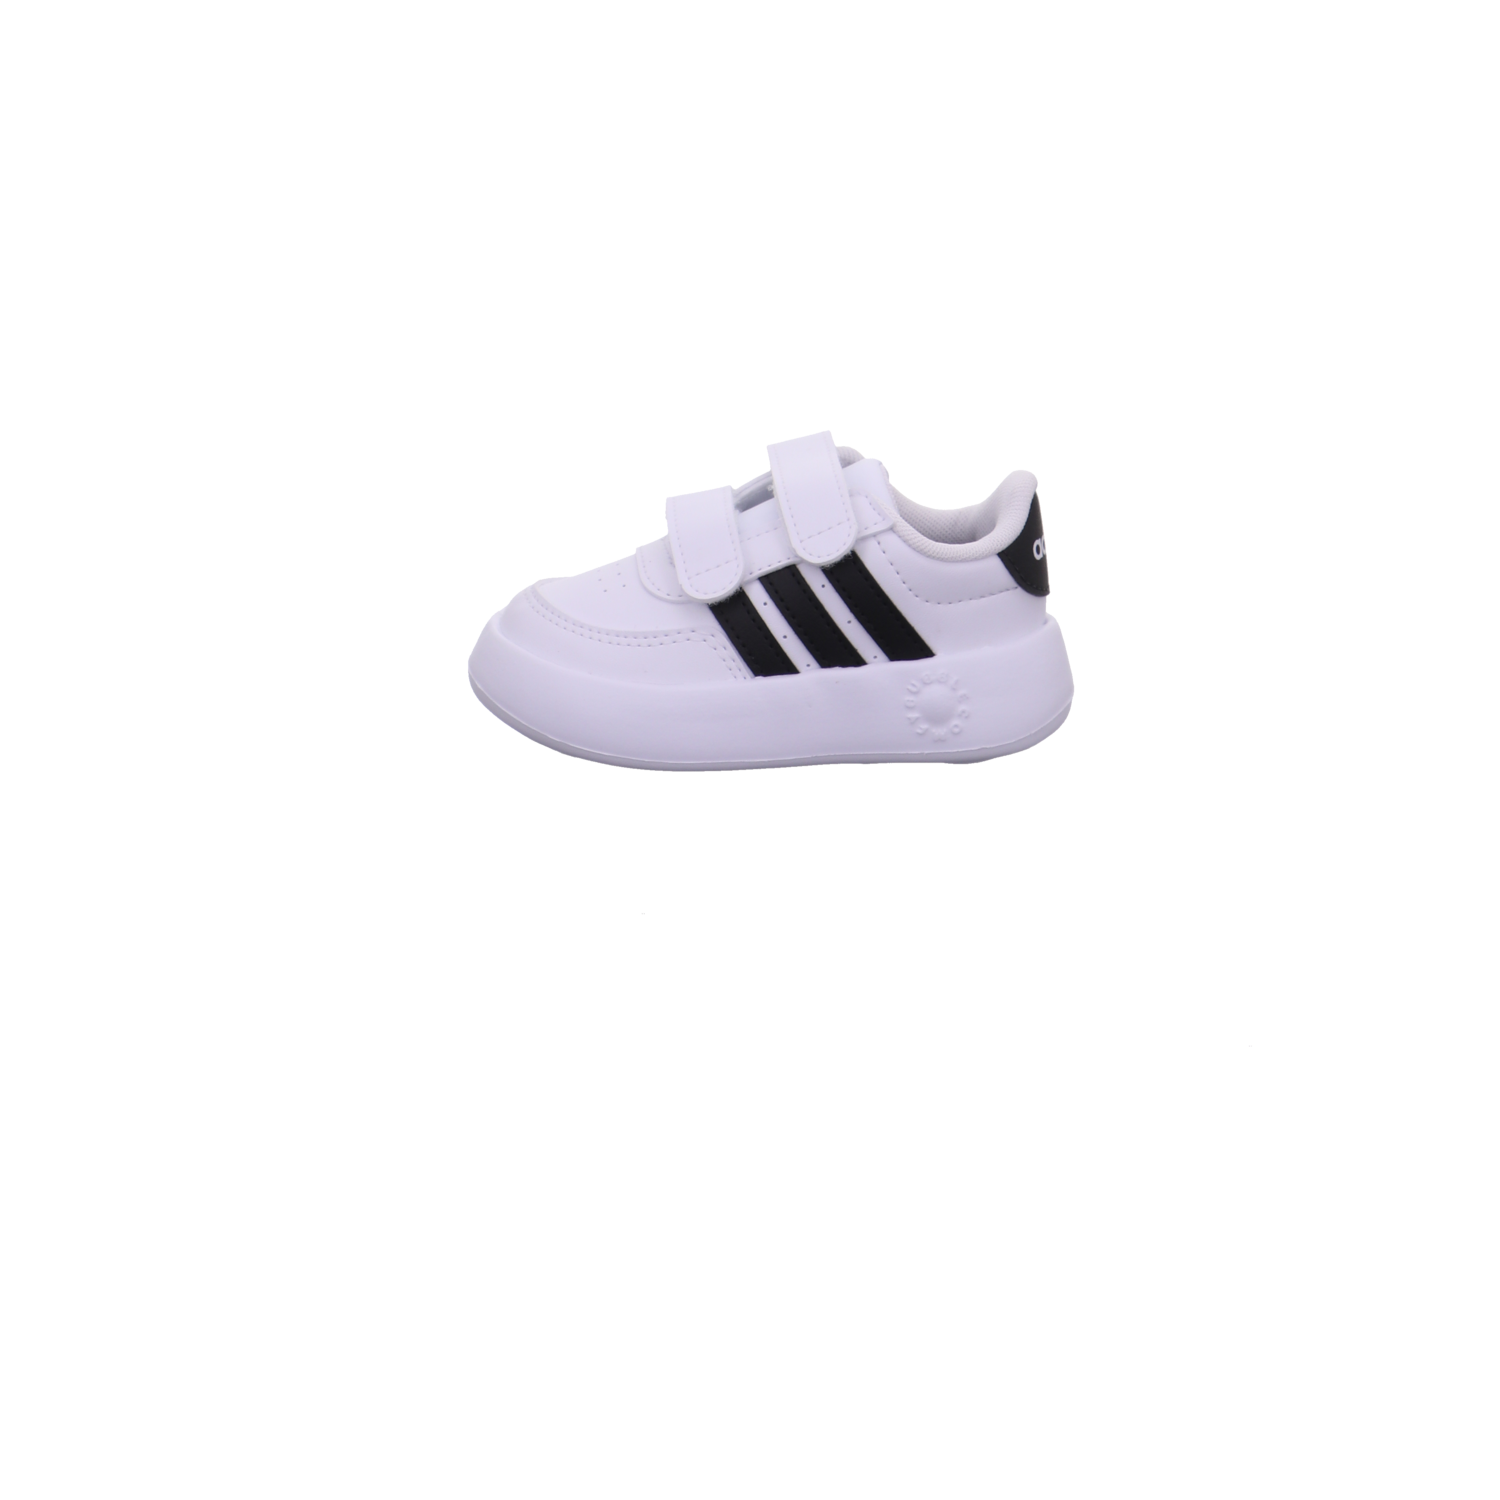 Adidas BREAKNET 2.0 CF I weiß-schwarz Bild1